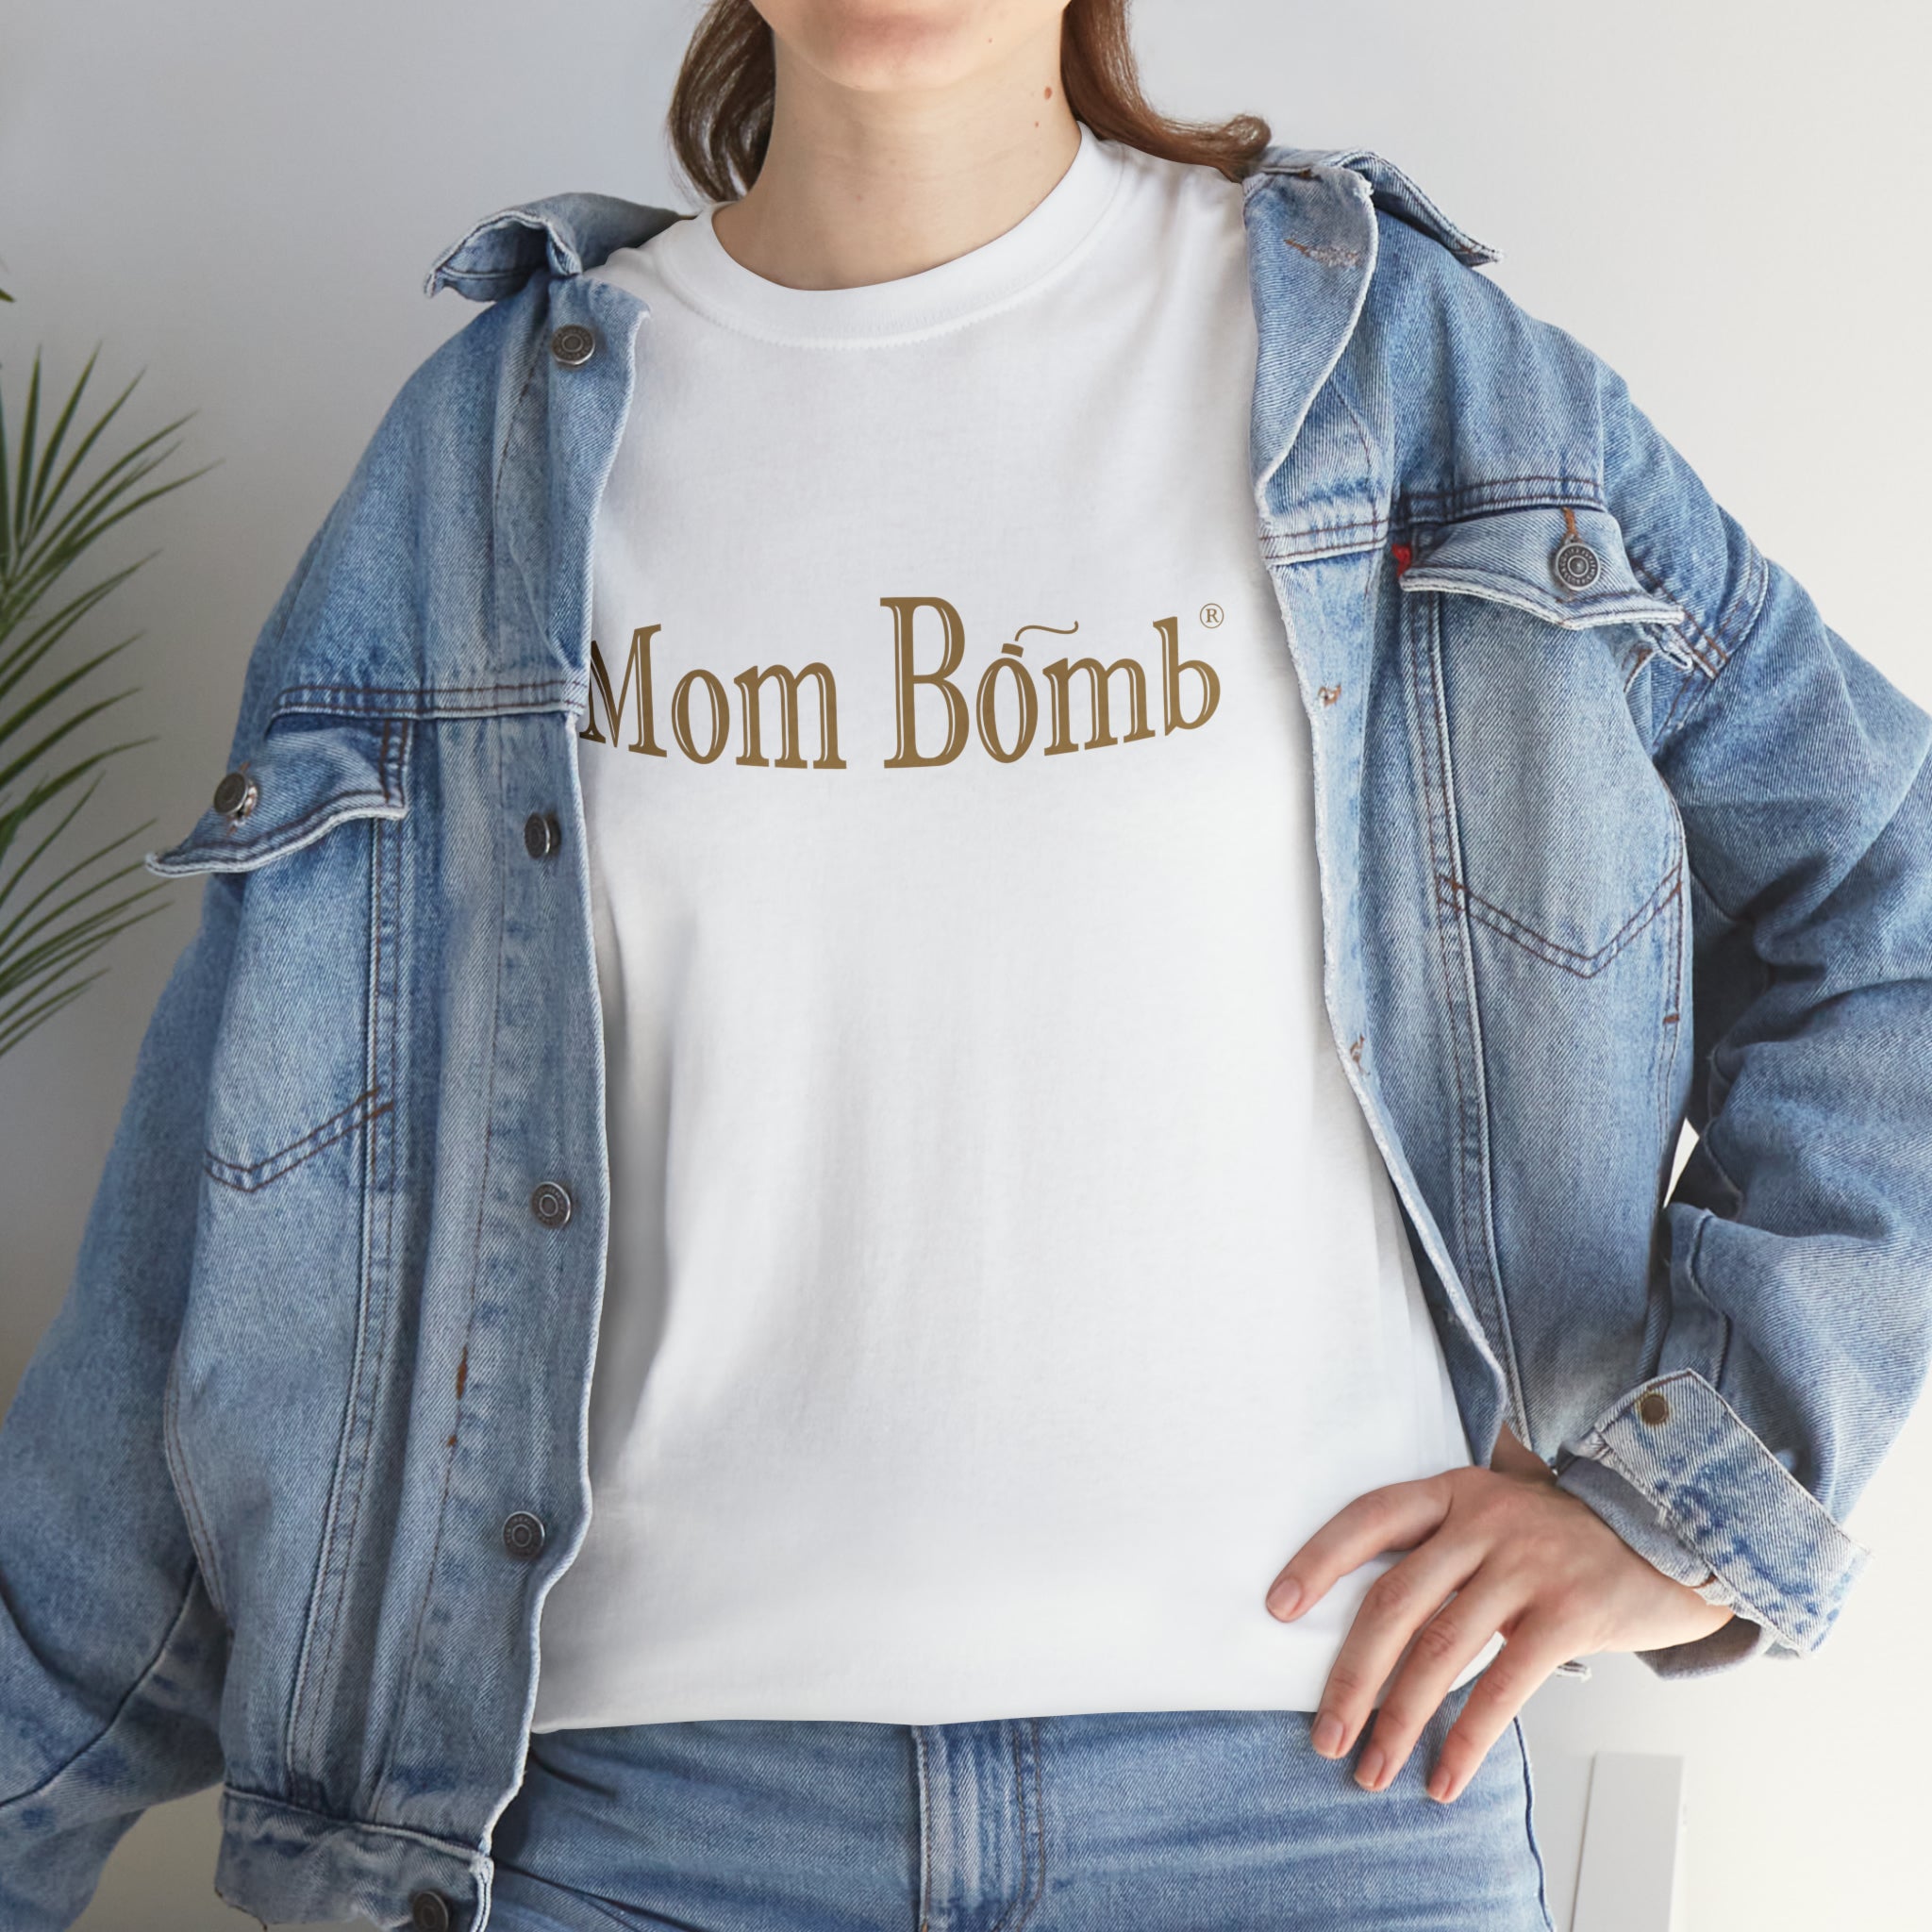 The Mom Bomb Cotton Tee